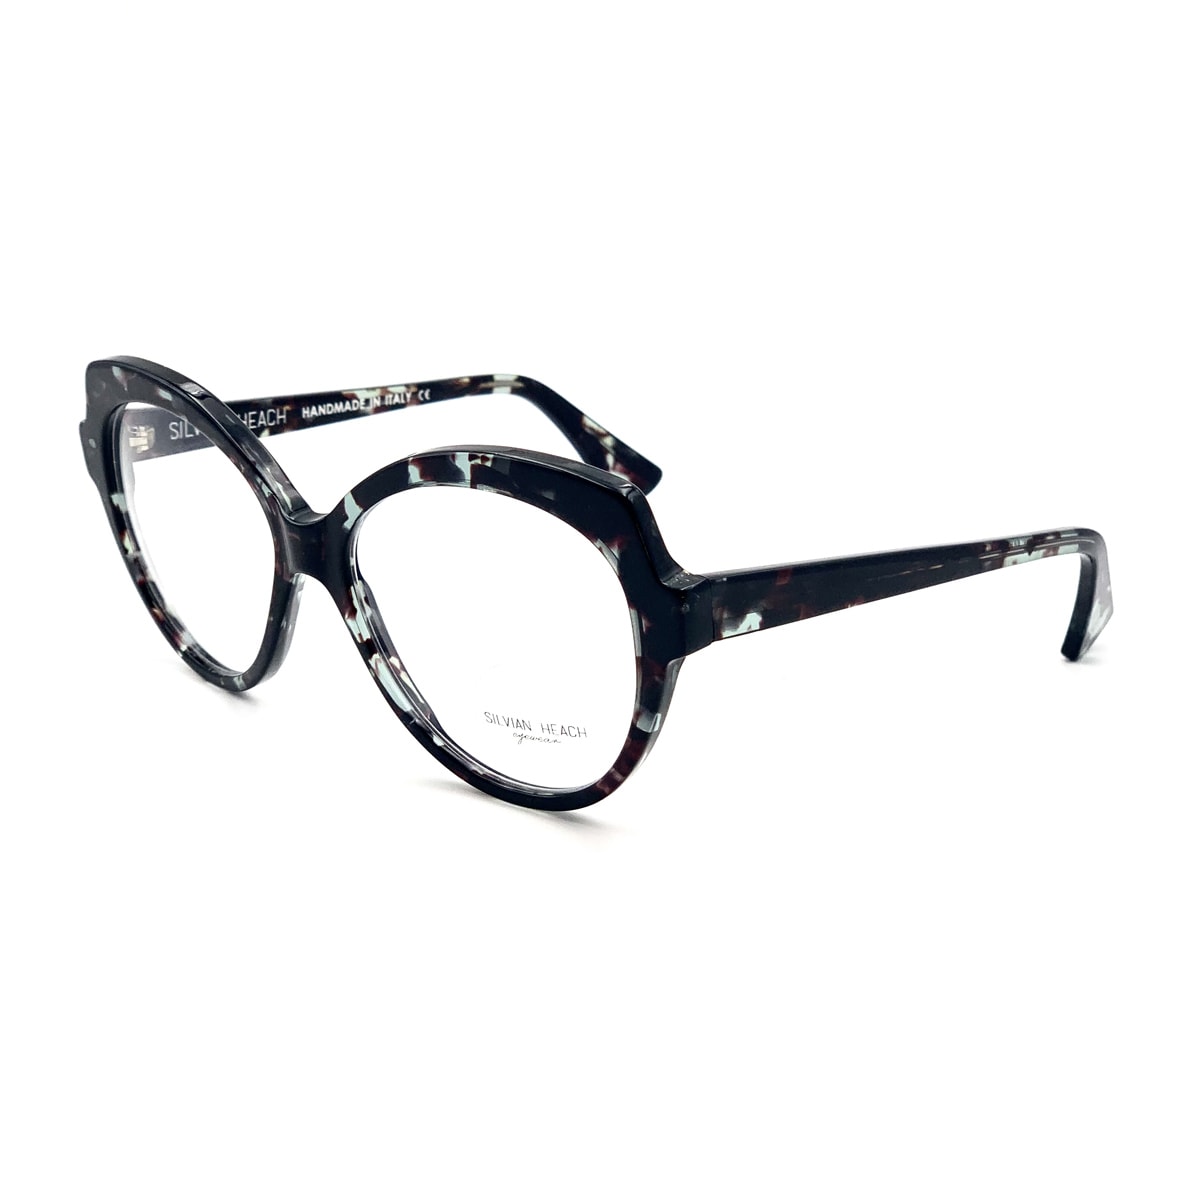 Silvian Heach Cosmopolitan Glasses In Black